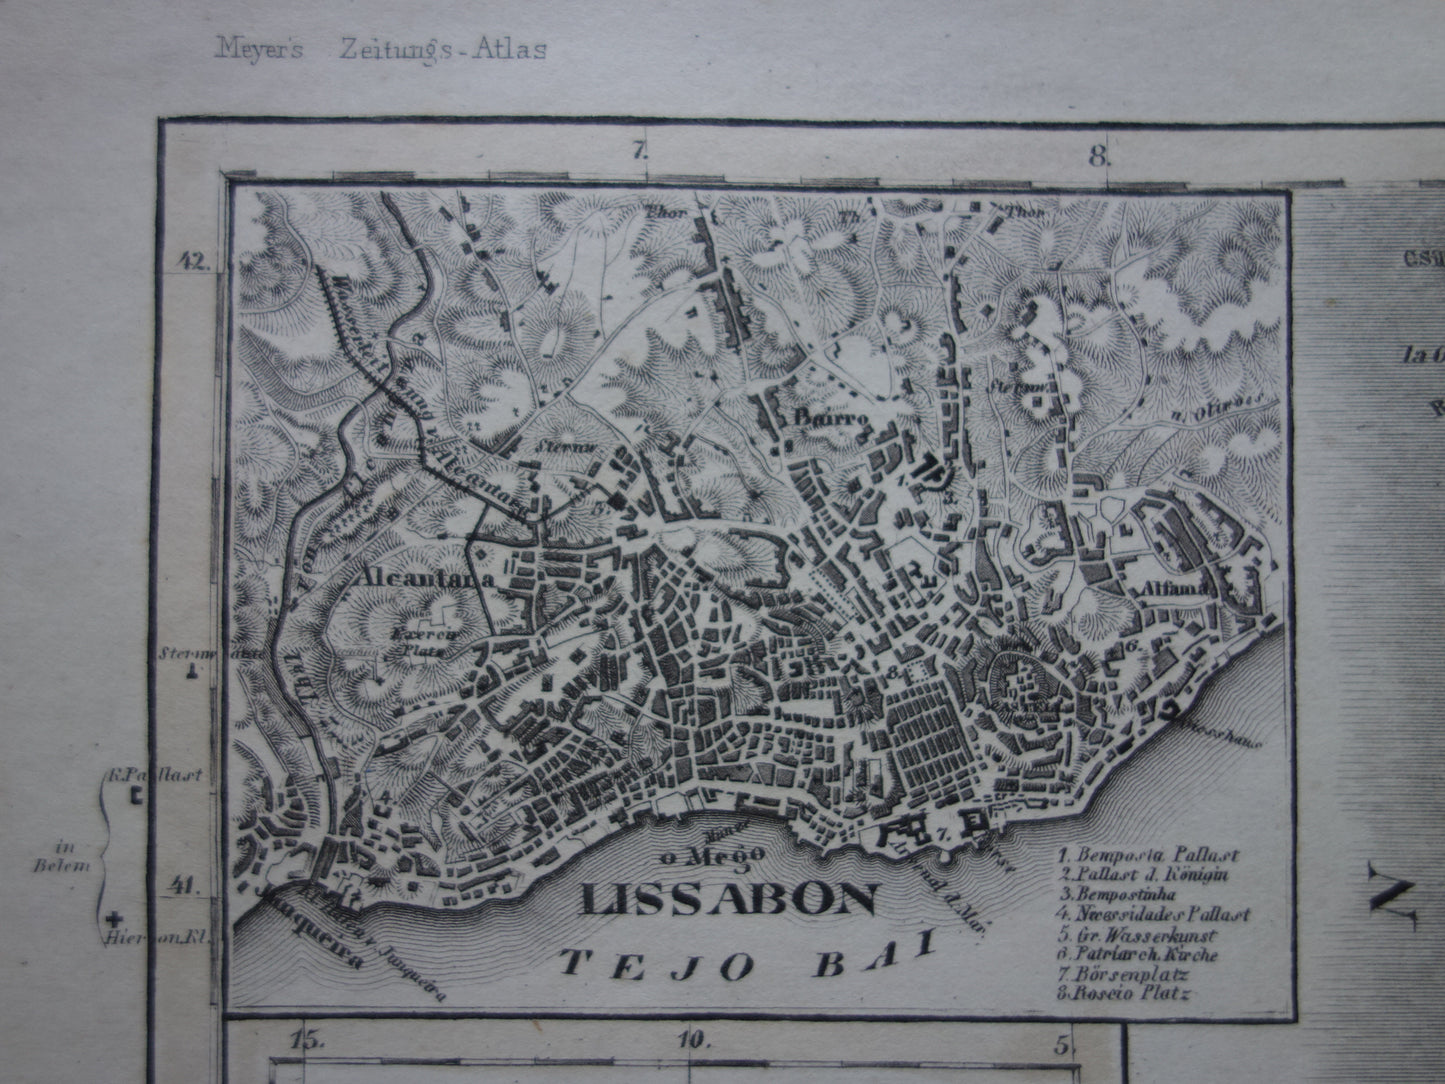 PORTUGAL Oude kaart van Portugal Azoren in 1849 originele antieke landkaart - vintage kaarten Lissabon Porto